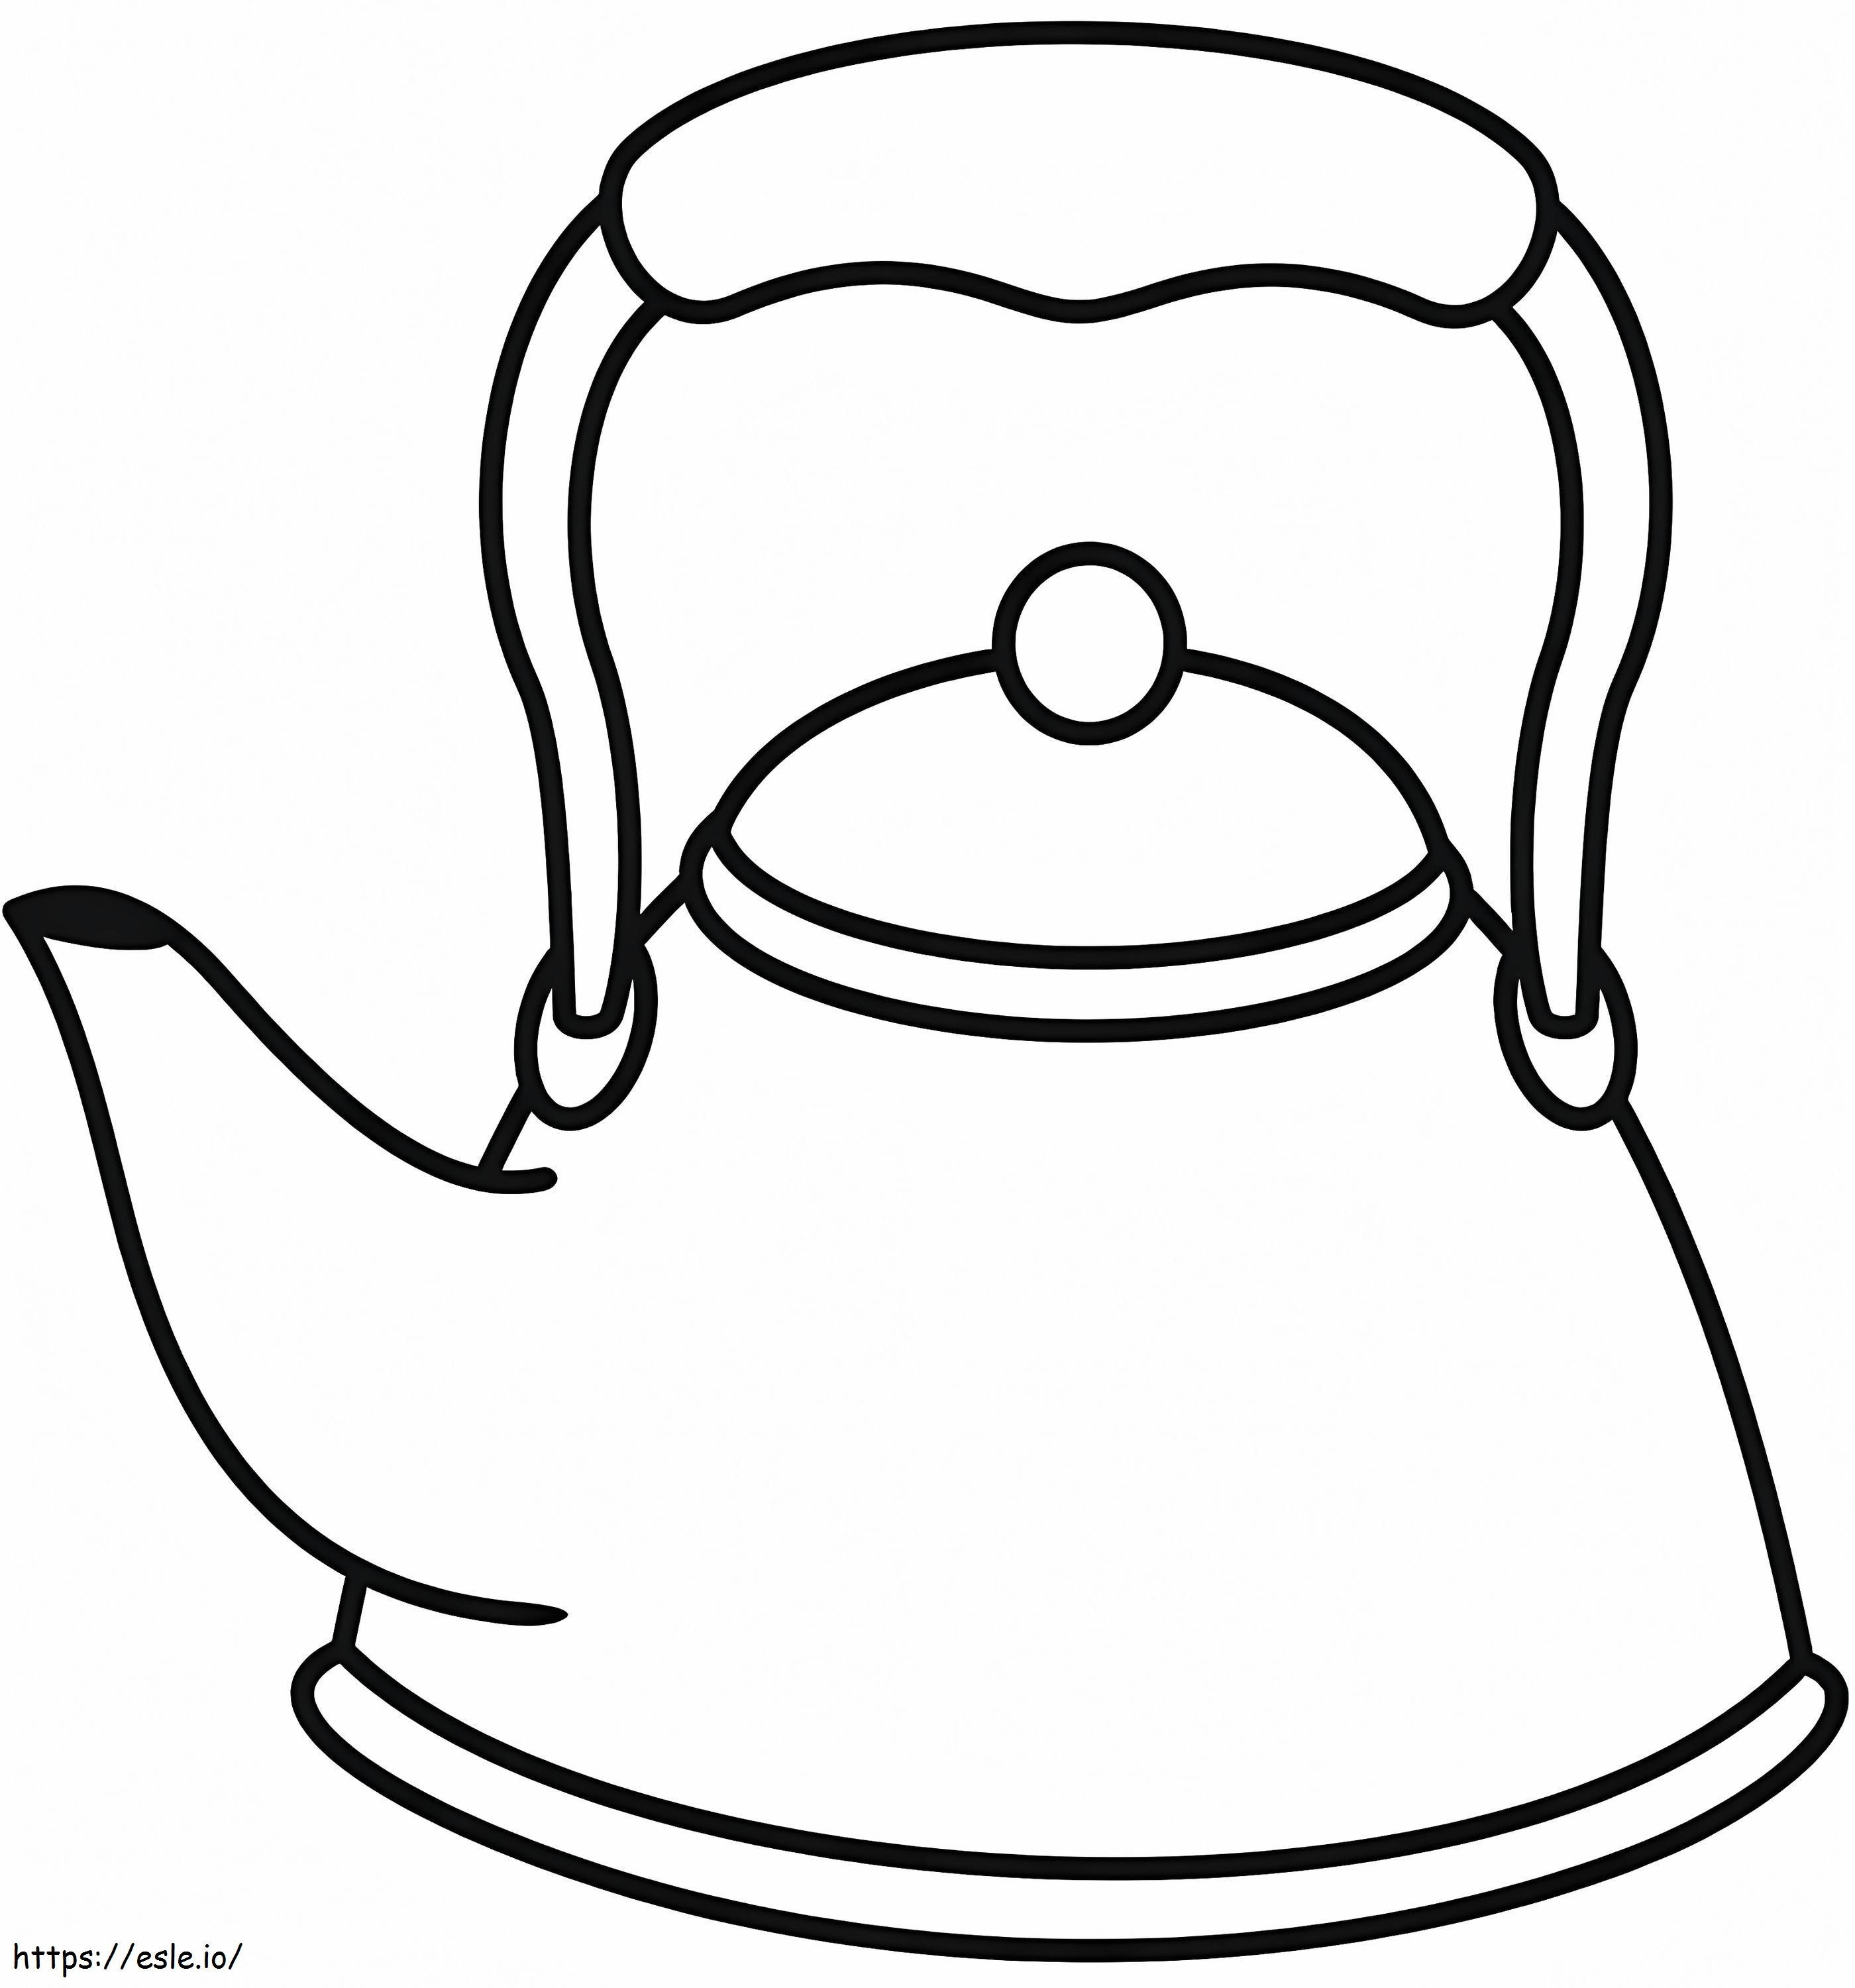 Un ceainic de colorat